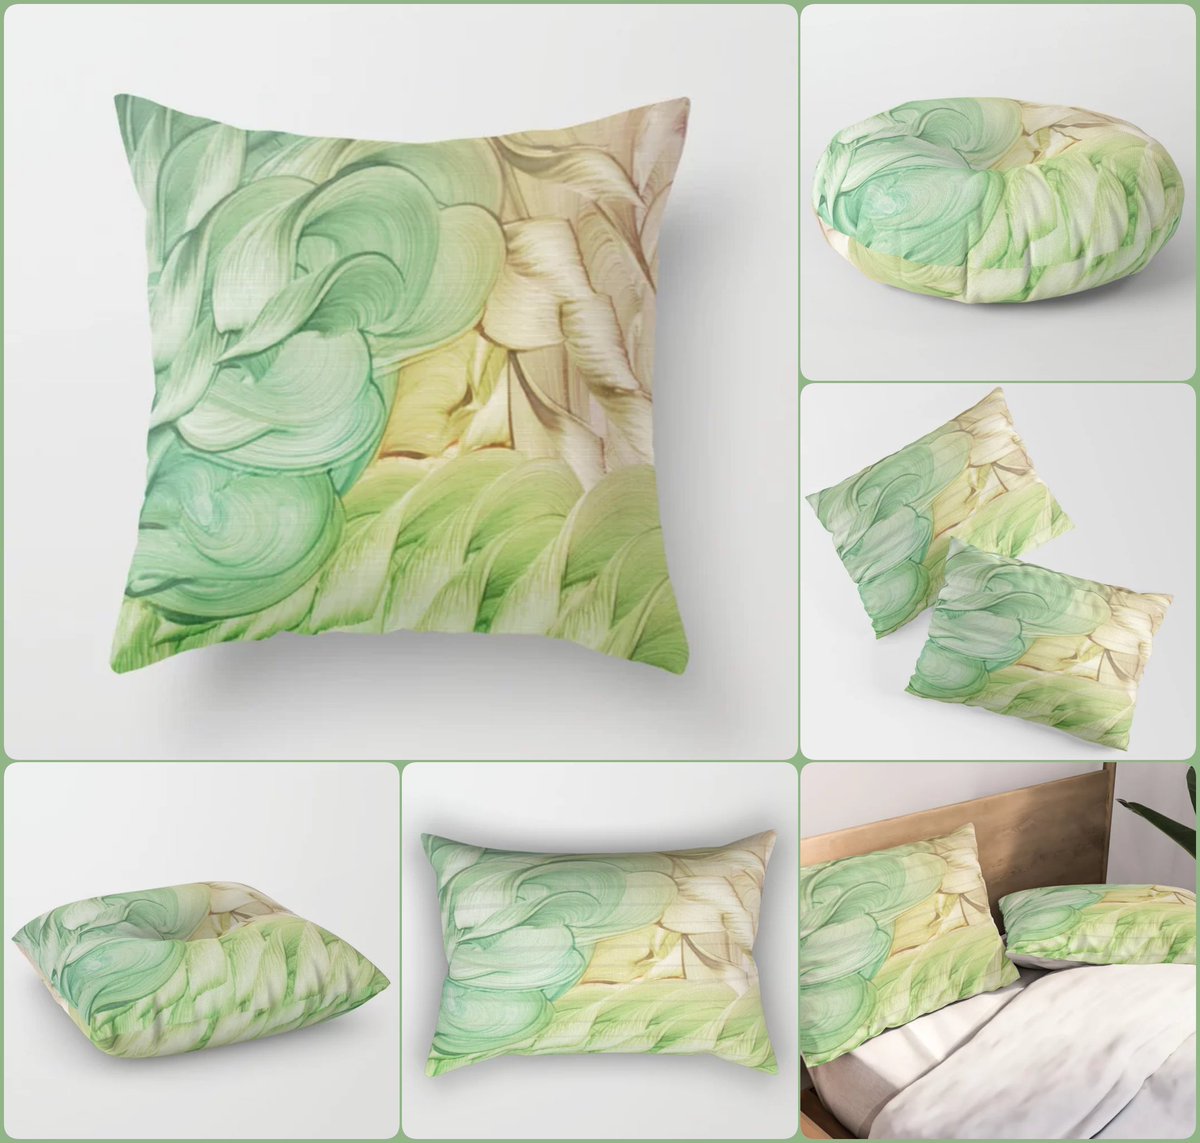 Circe Throw Pillow~by Art Falaxy~
~Unique Pillows!~
#artfalaxy #art #bedroom #pillows #homedecor #society6 #Society6max #swirls #modern #trendy #accessories #accents #floorpillows #pillows #shams #blankets

society6.com/product/circe2…
COLLECTION: society6.com/art/circe23755…